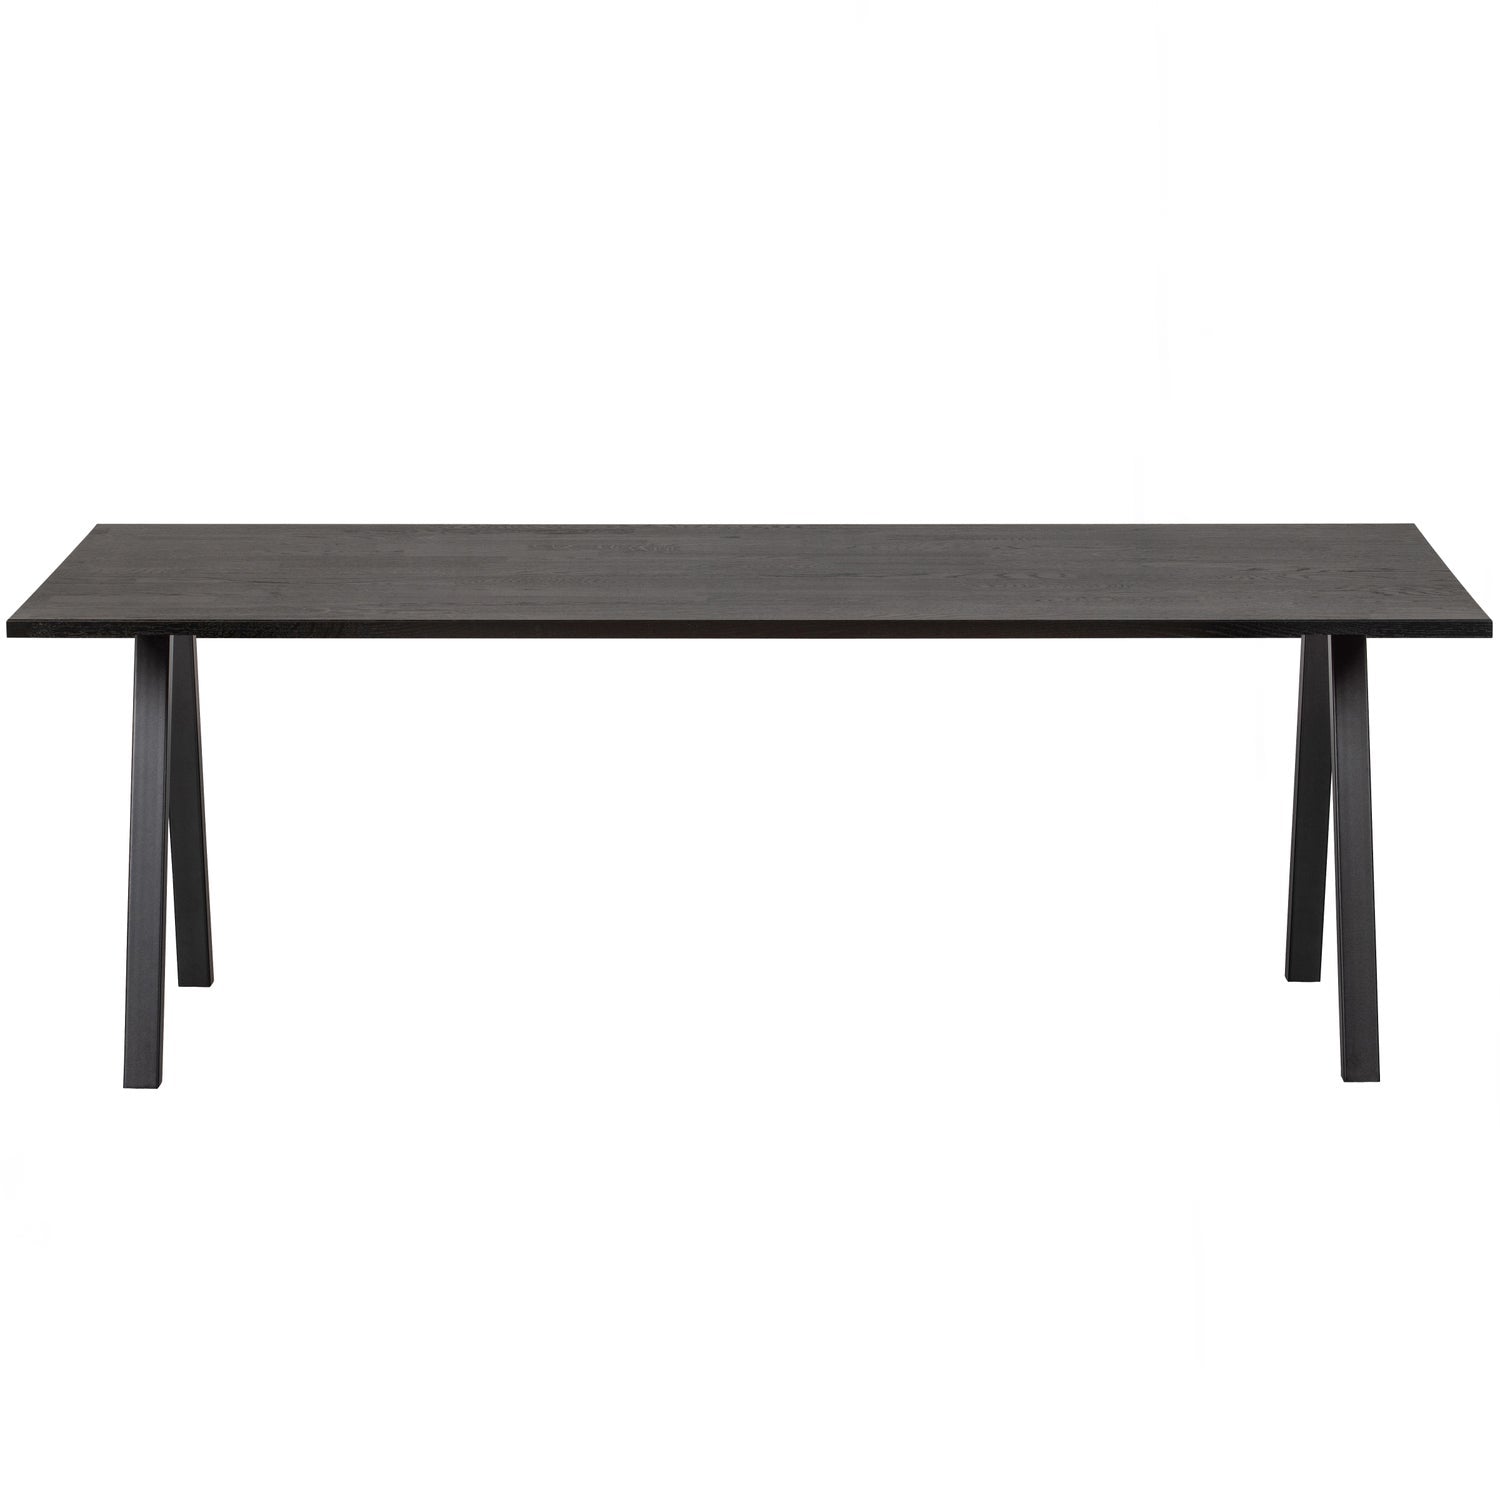 TABLO TABLE OAK BLACKNIGHT 180X90 [fsc] & SQUARE LEG